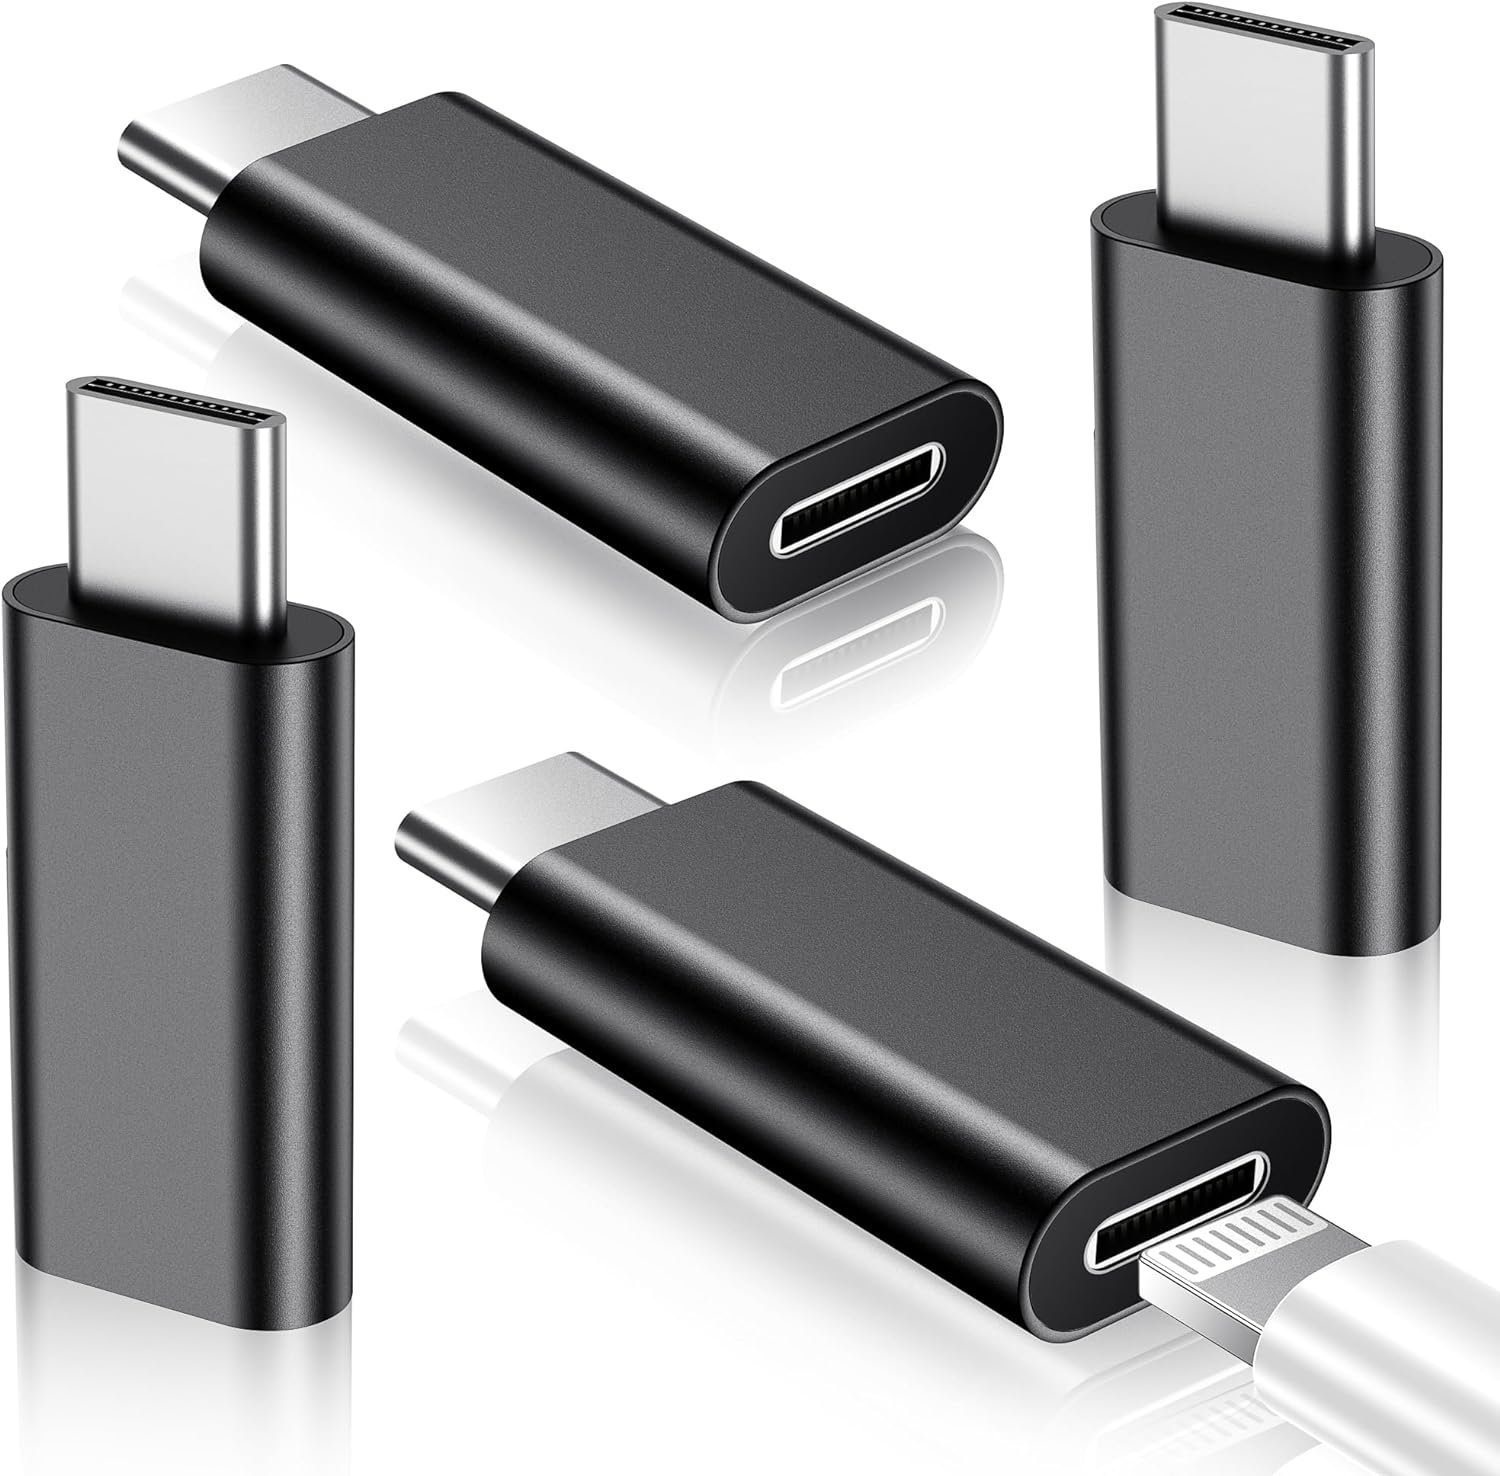 Apple Lightning to USB C Adapters